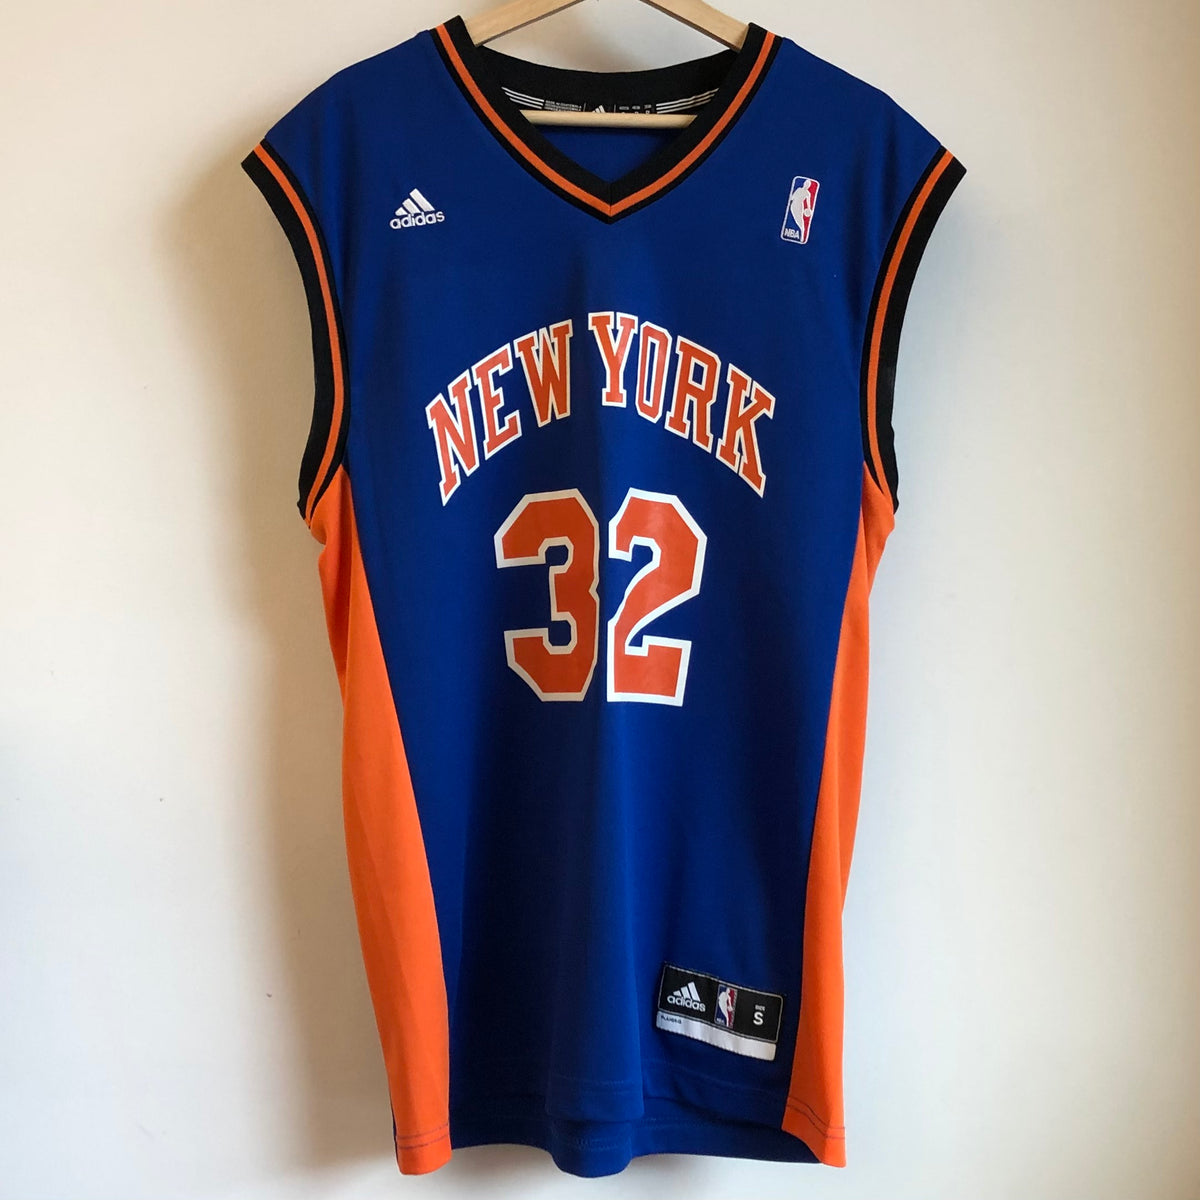 Adidas New York Knicks NBA Fan Shop